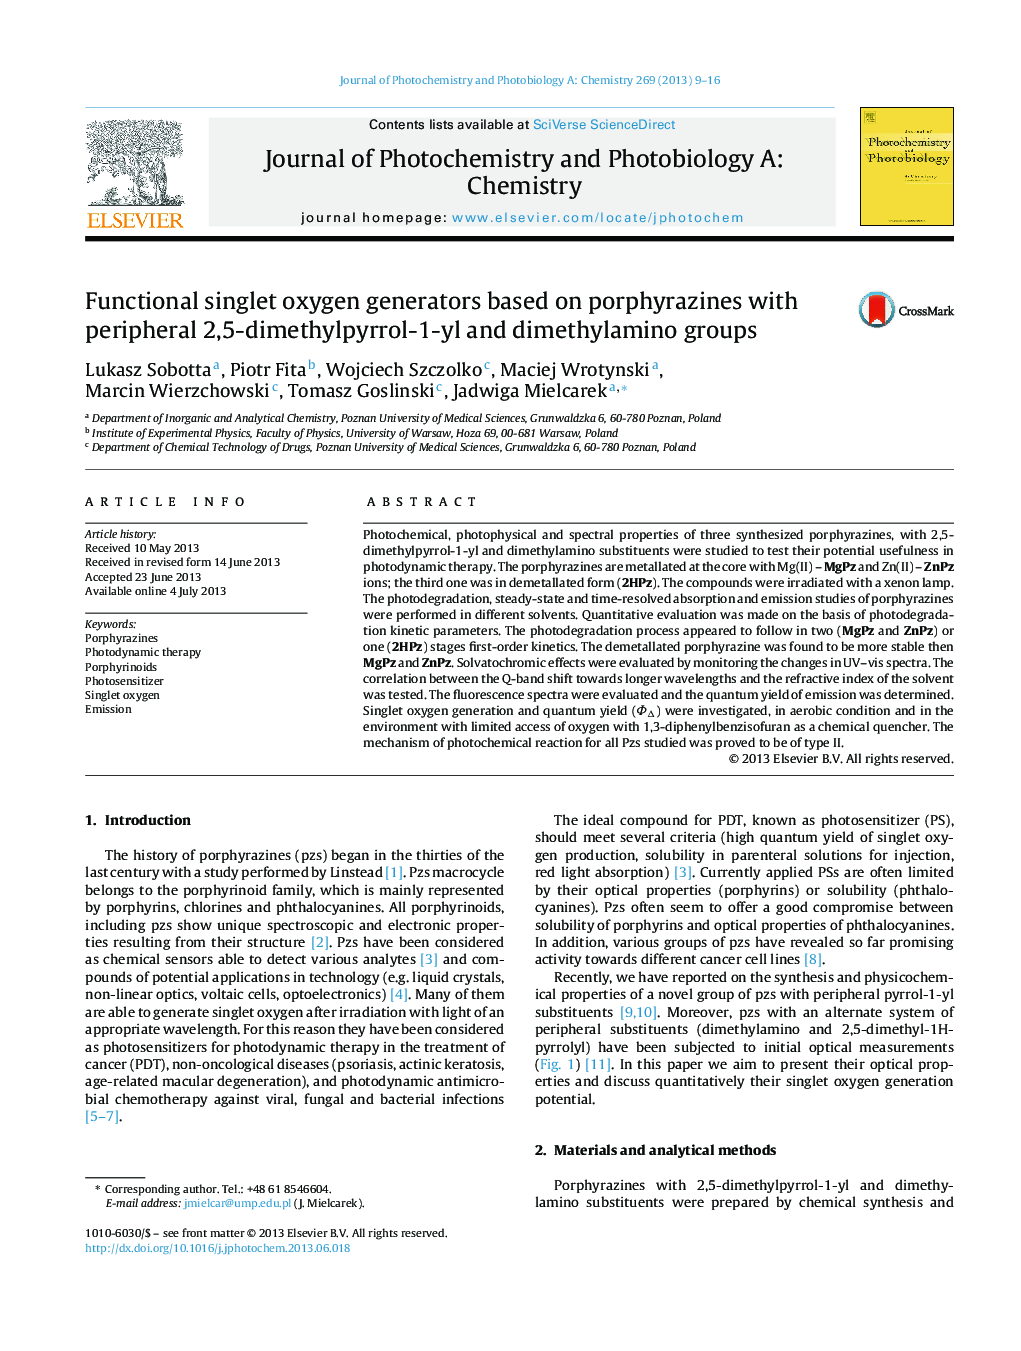 Functional singlet oxygen generators based on porphyrazines with peripheral 2,5-dimethylpyrrol-1-yl and dimethylamino groups